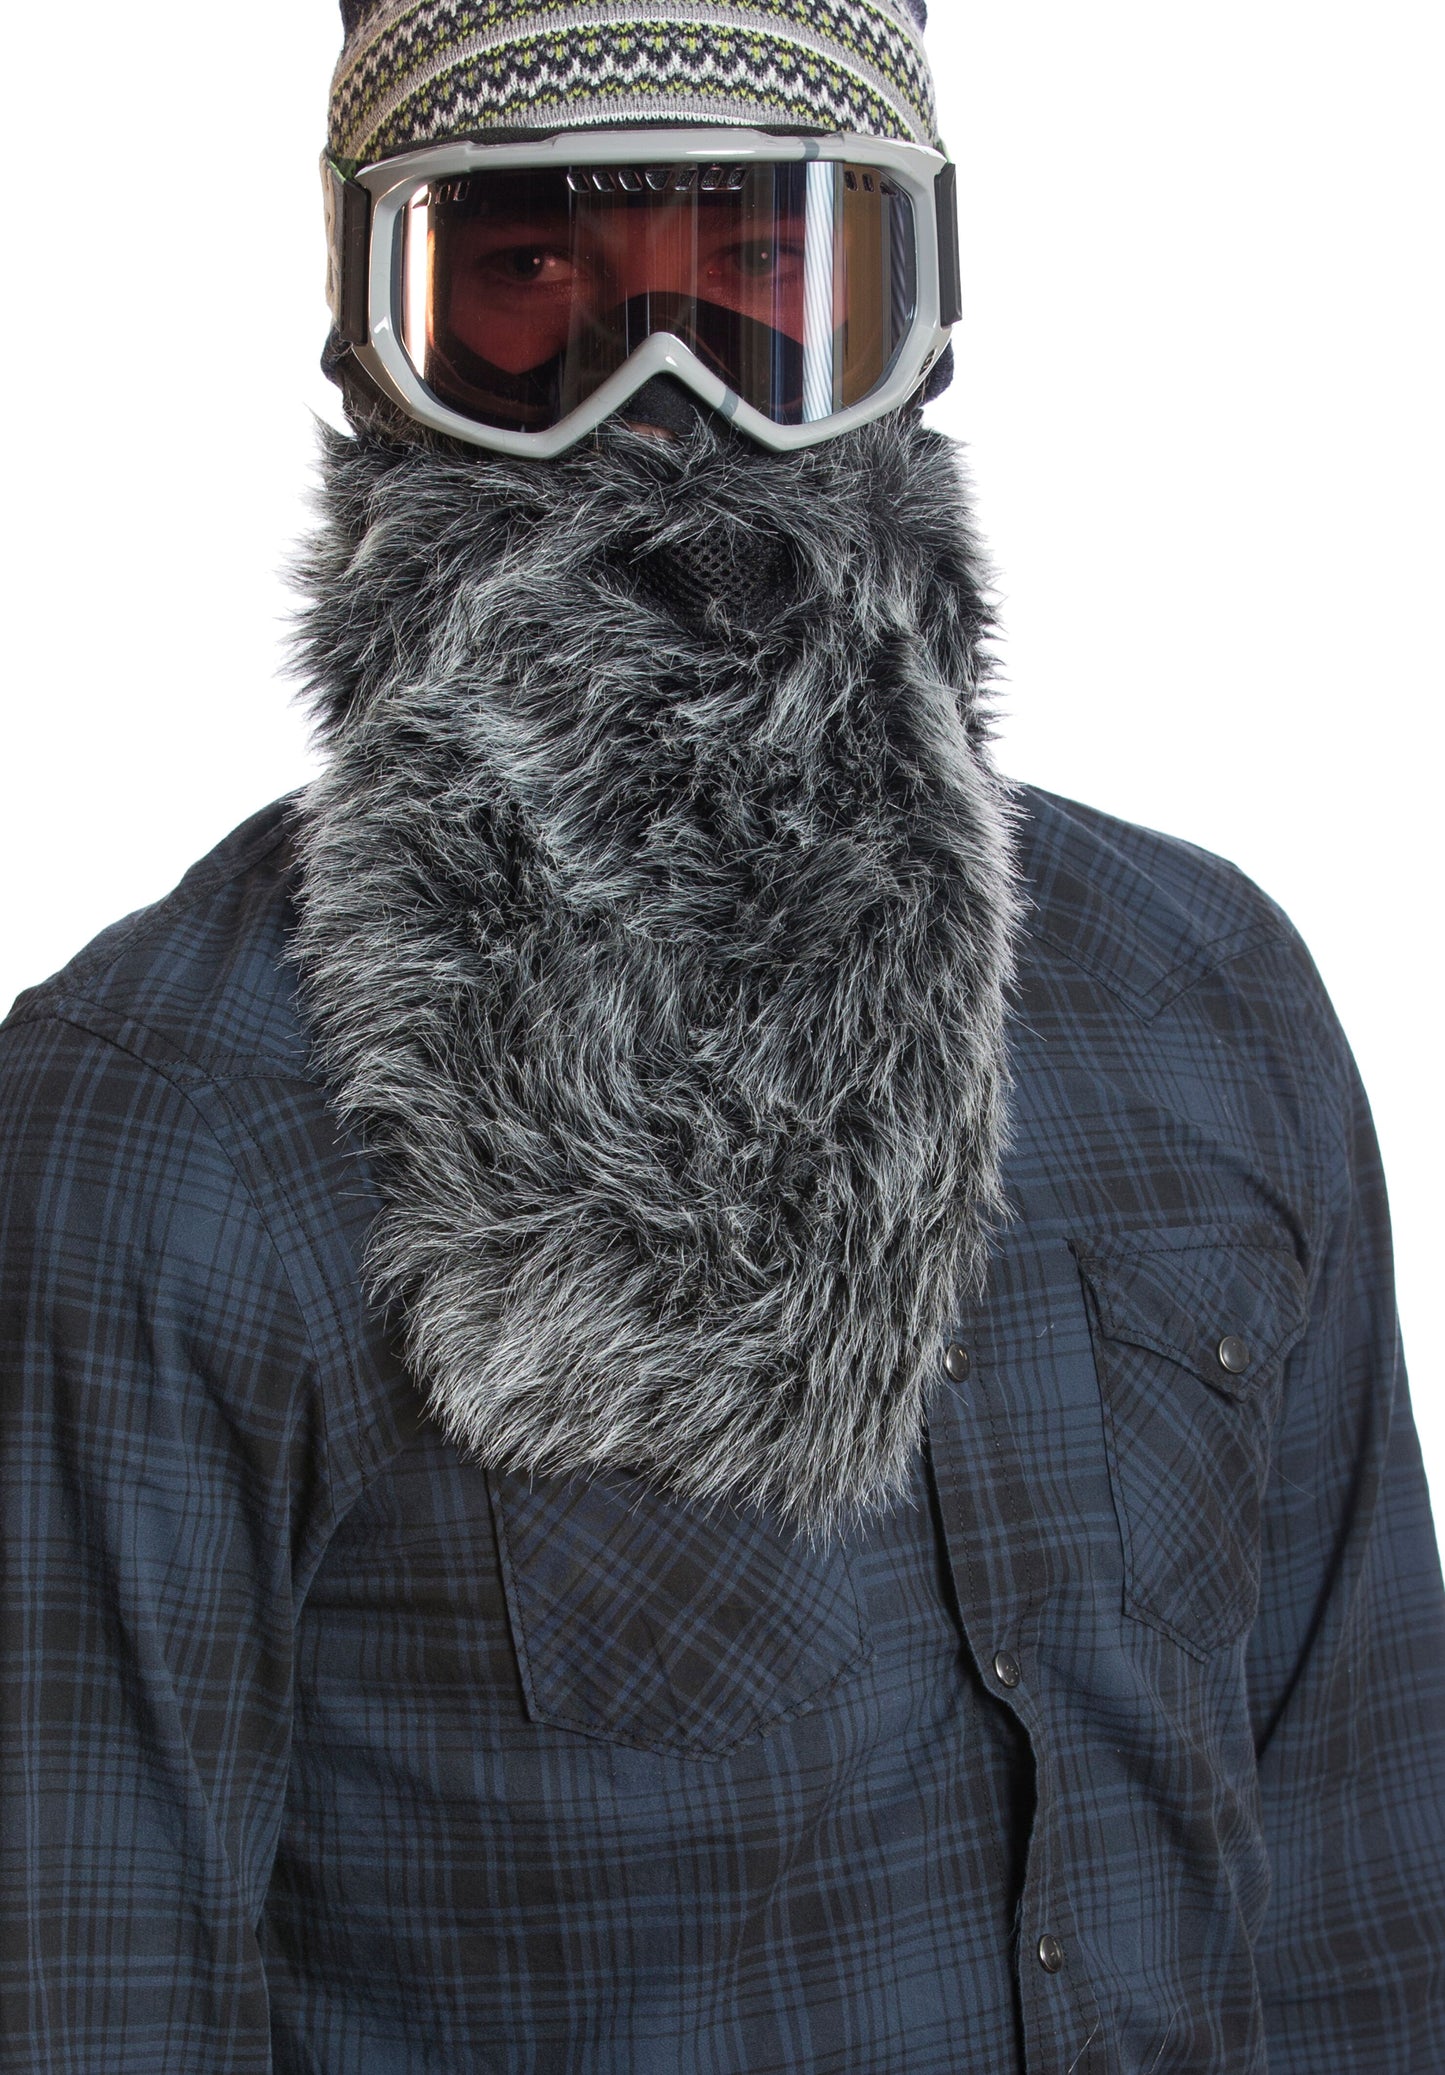 Beardski Great Wolf Skimask